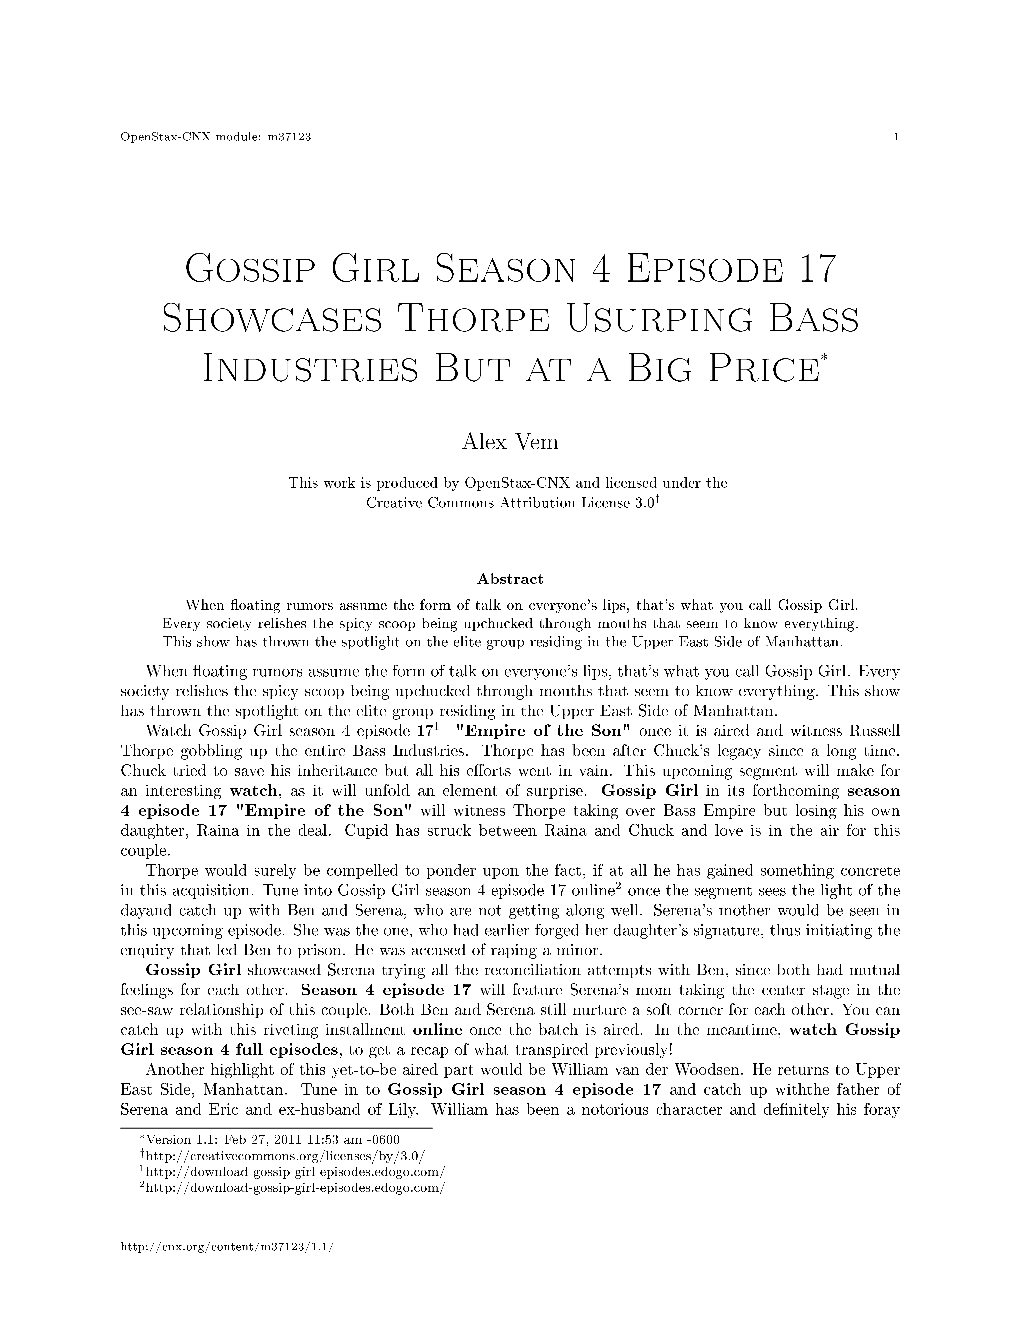 Gossip Girl Season 4 Episode 17 Showcases Thorpe Usurping Bass Industries but at a Big Price*